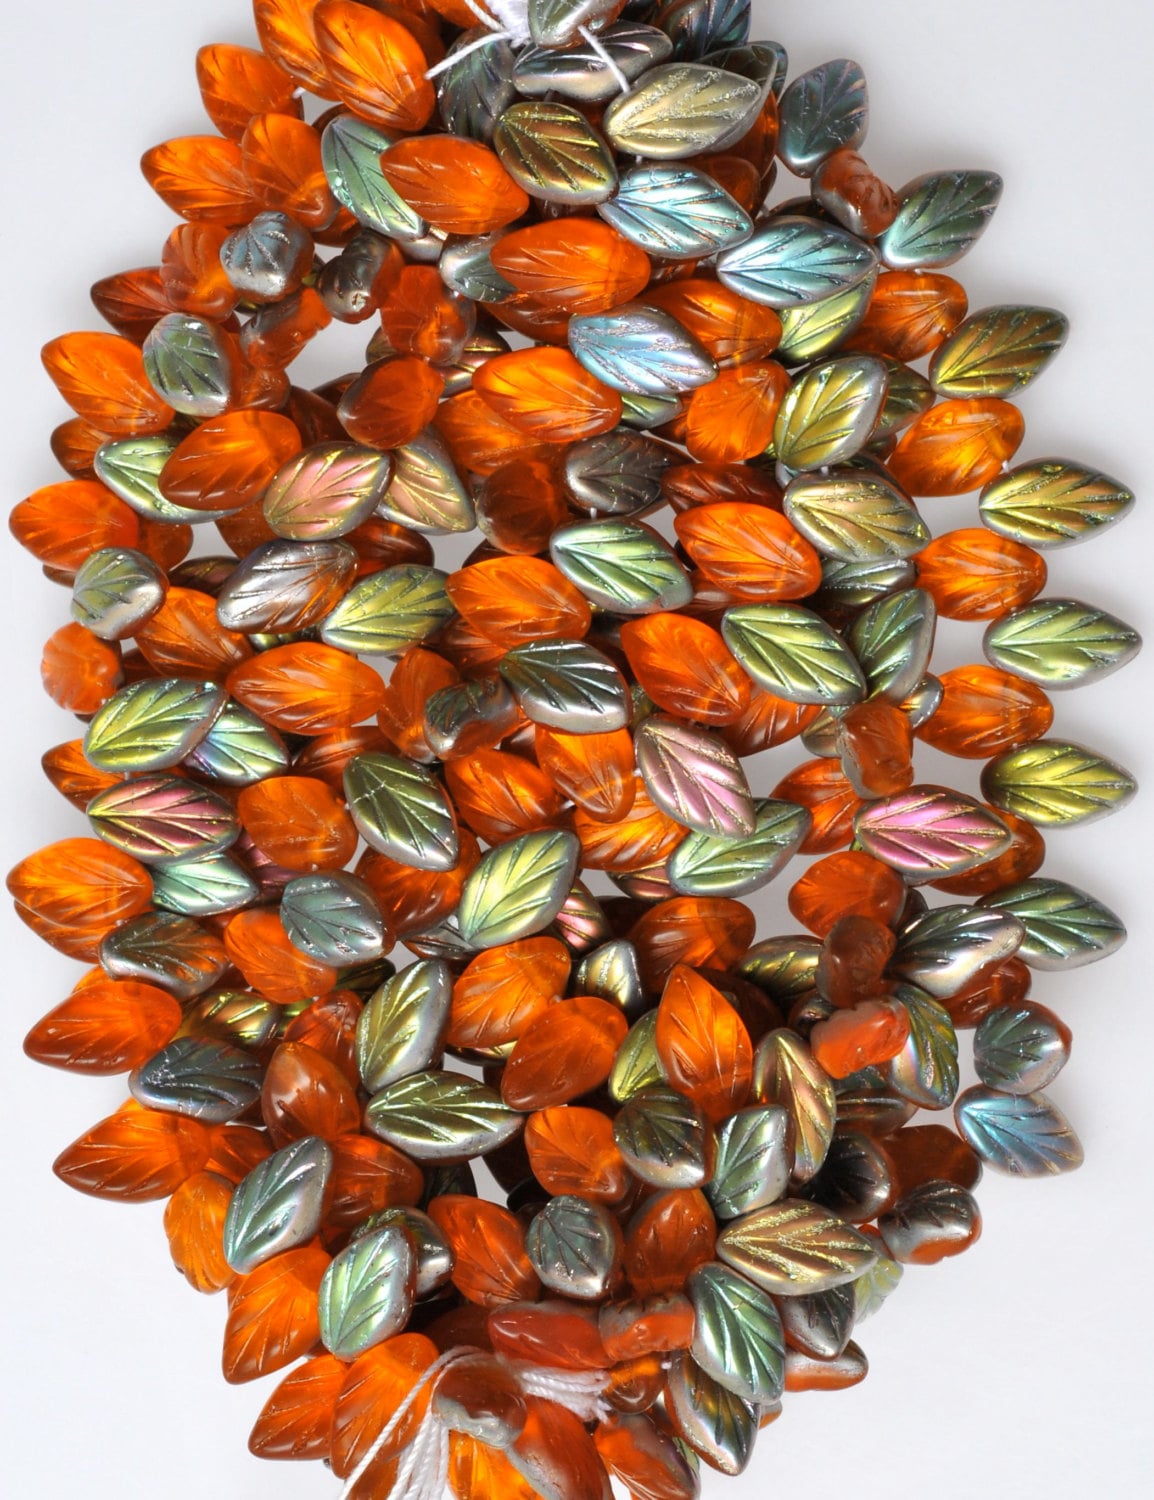 10mm X 5mm Small Leaf Bead Czech Glass Leaf Beads Top Hole Beads